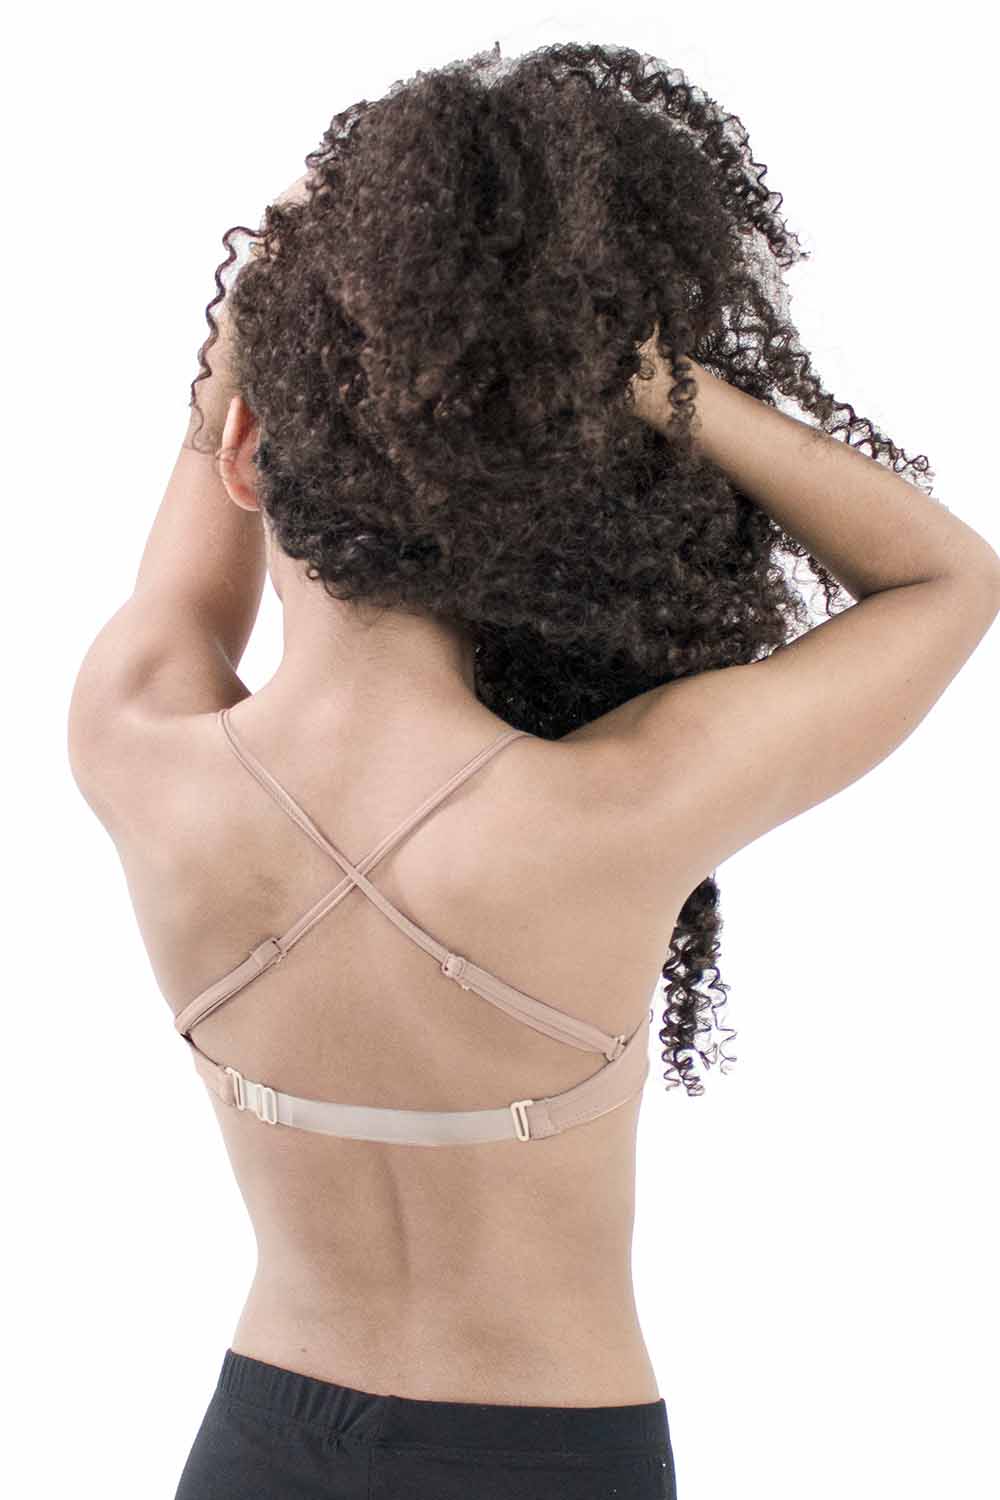 Wholesale back bra strap For Supportive Underwear 